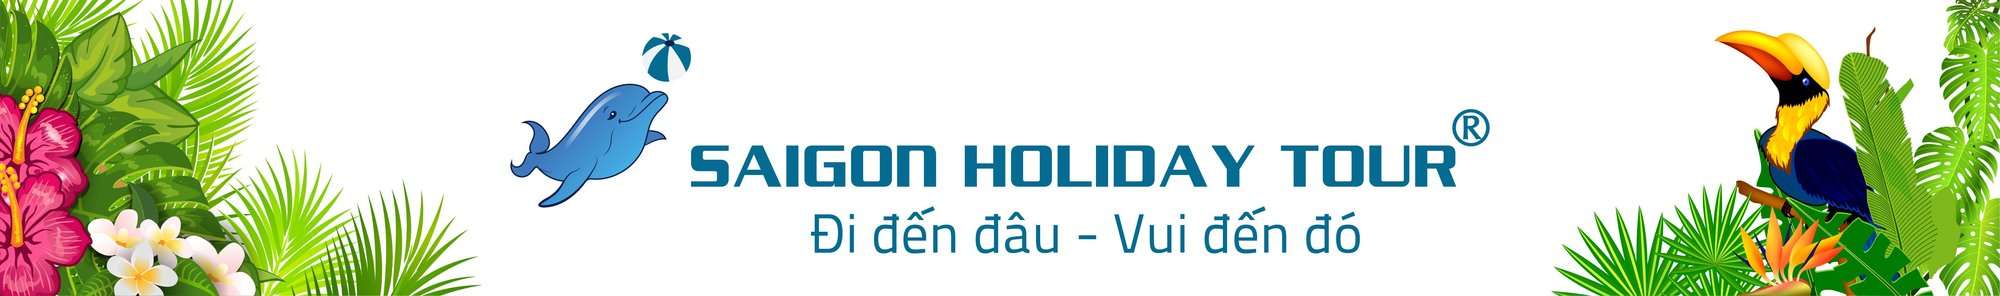 Du lịch teambuilding Saigon Holiday Tour